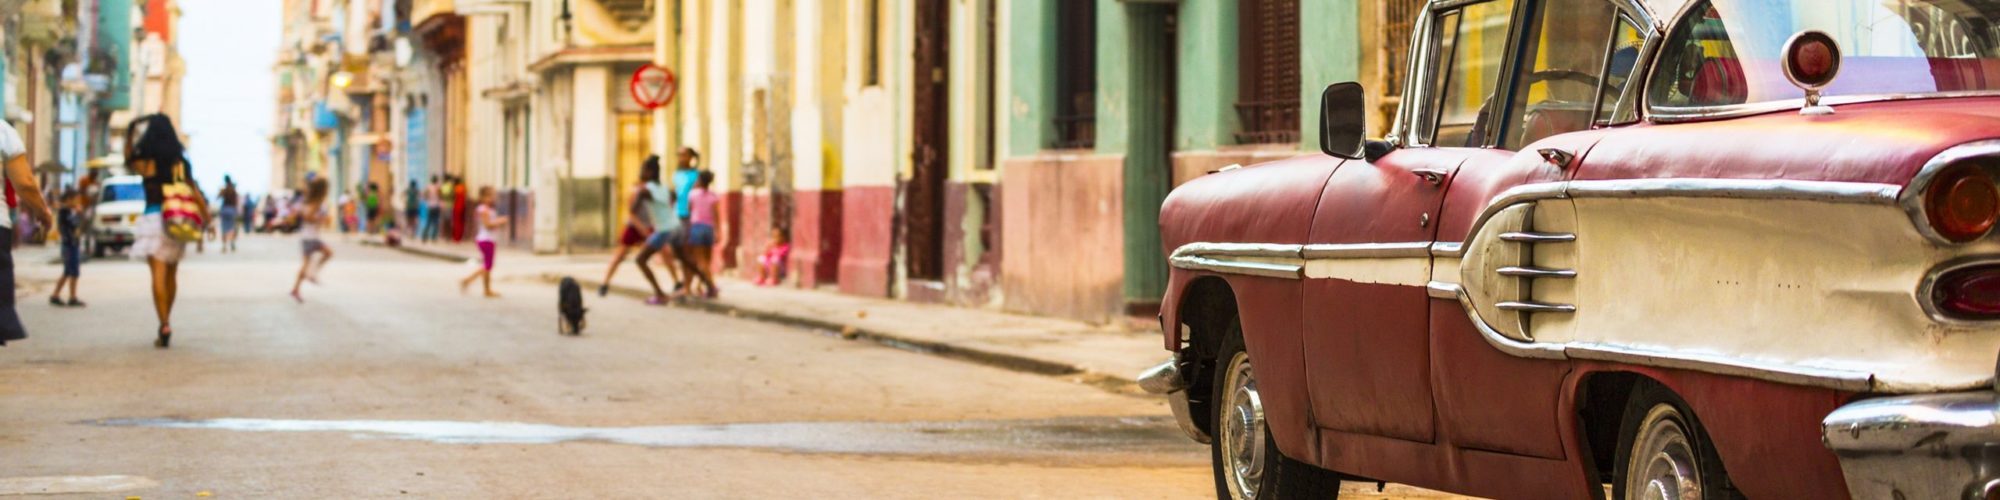 Havana travel agents packages deals